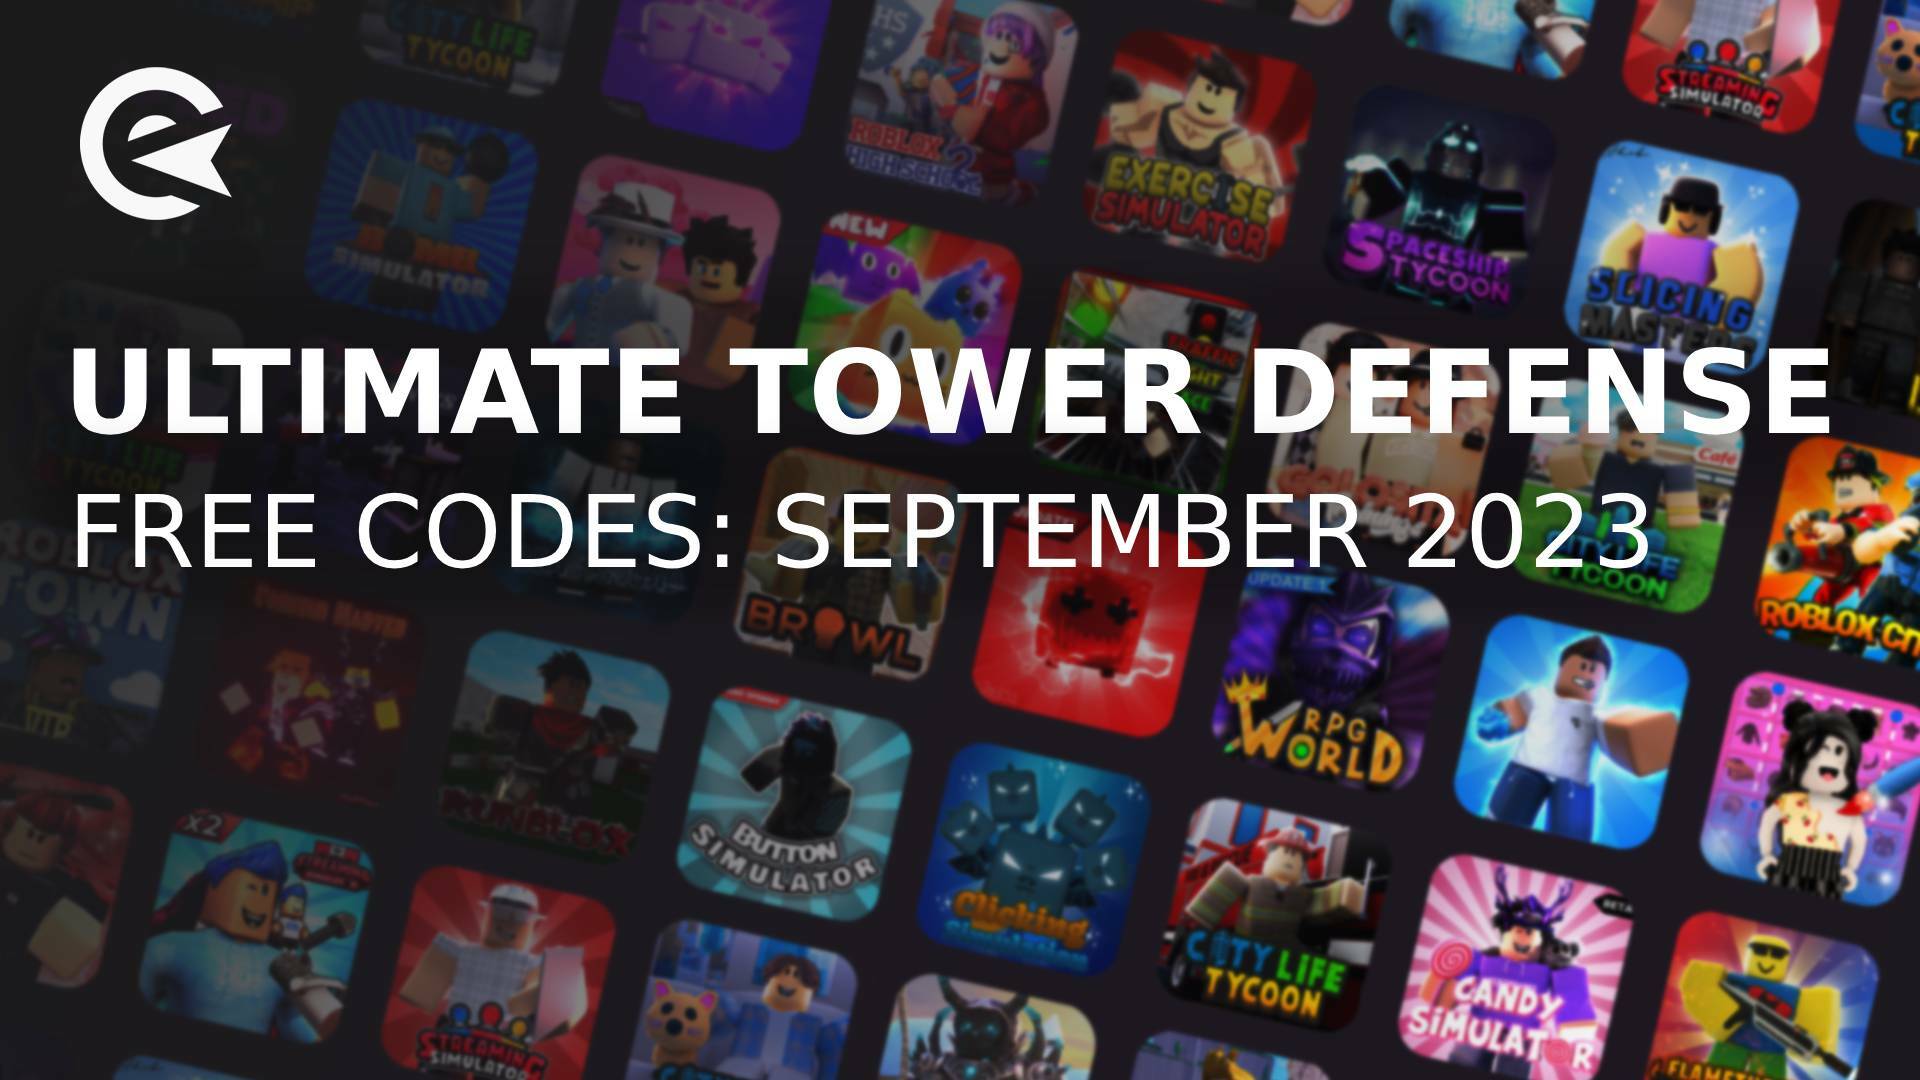 Anime World Tower Codes  WePC